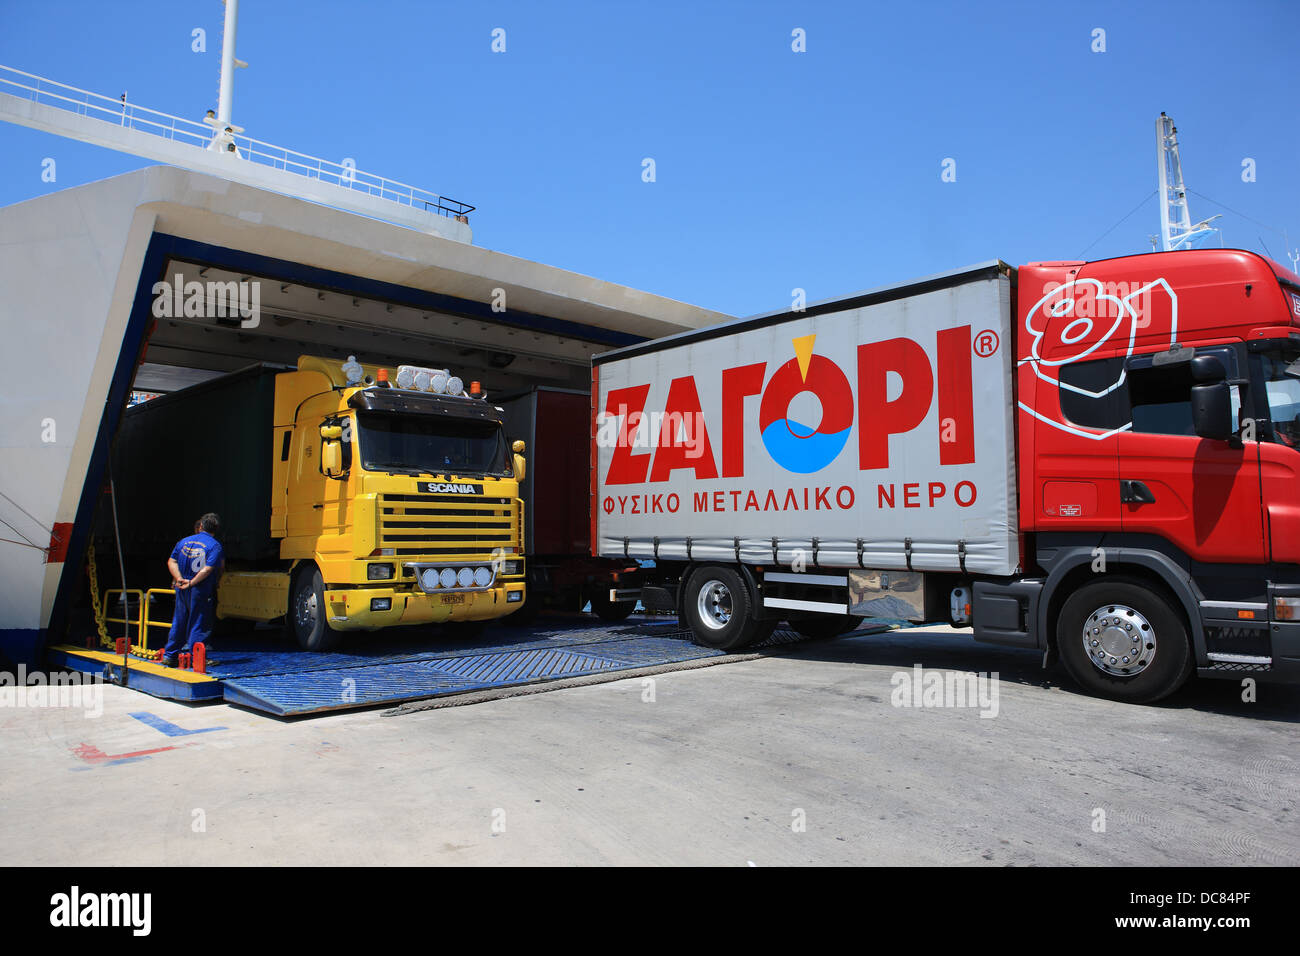 Transport lorries exiting a ferry in the Greek port of Igoumenitsa. ΖΑΓΟΡΙ (ZAGORI) is a Greek bottled water company. Stock Photo